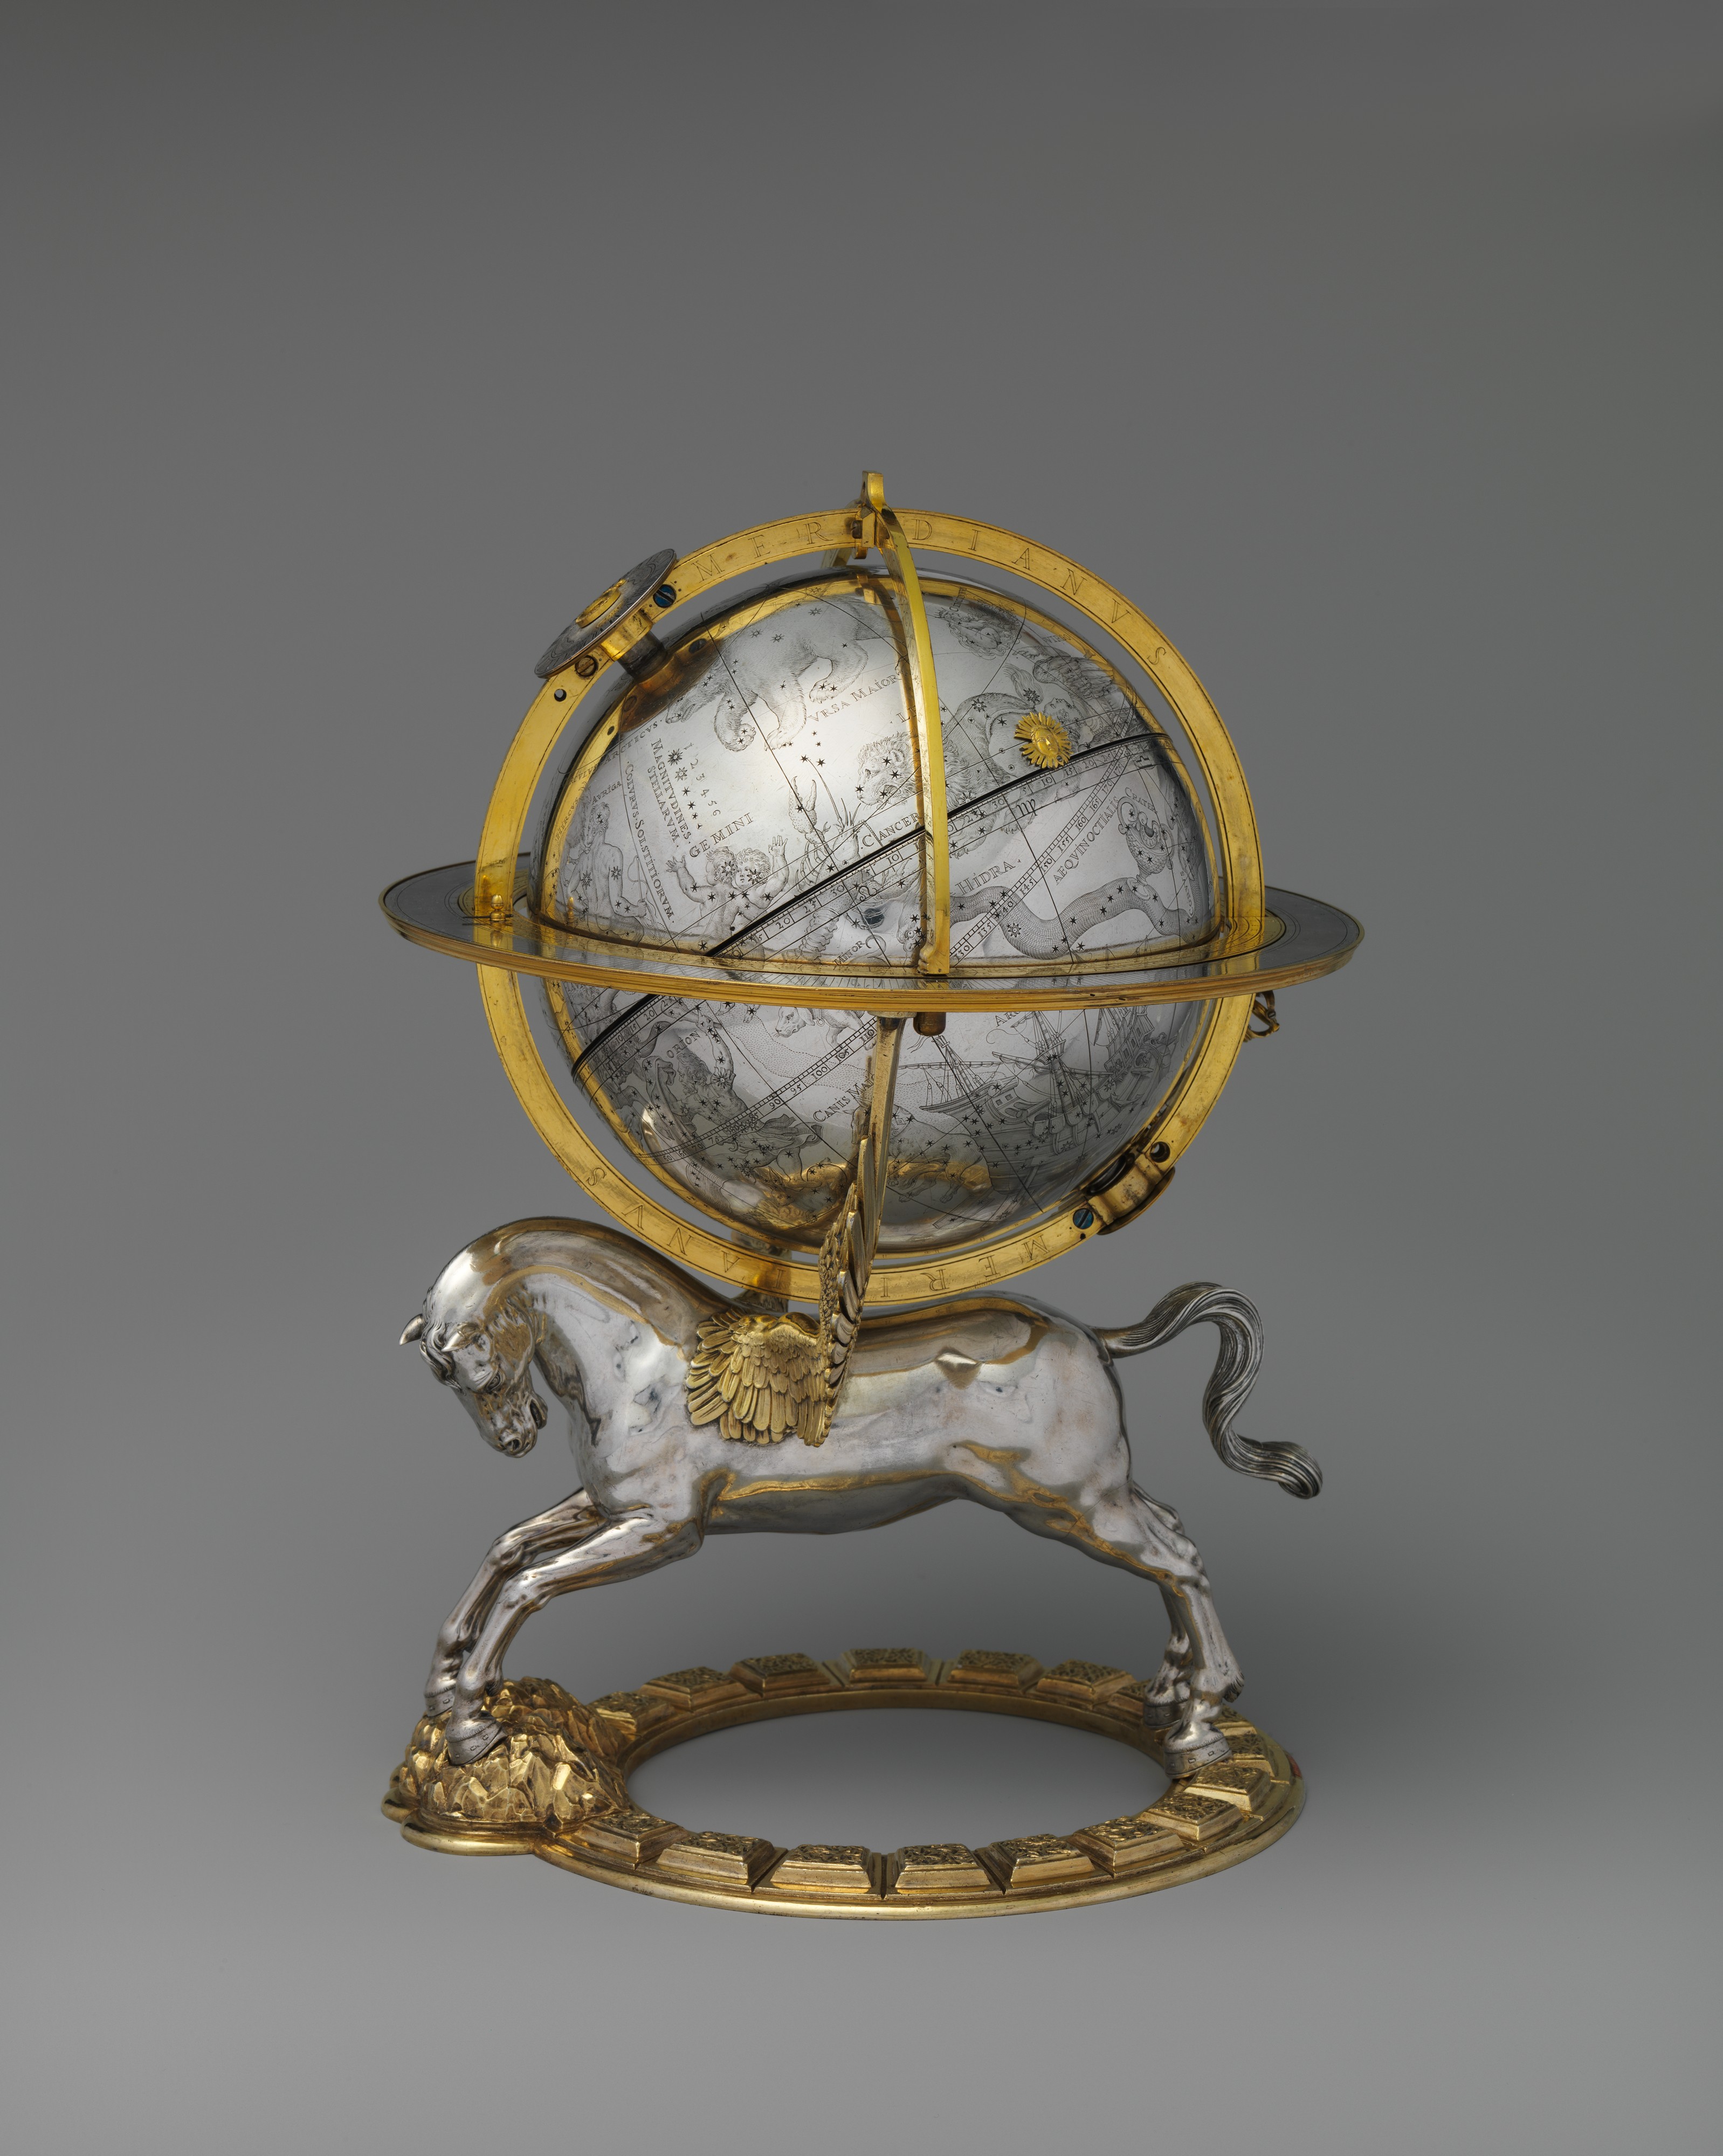 RUHKM Oscilación Magnética Cinética Orbital Craft Escritorio Decoración Perpetual Equilibrio Celestial Globe Newton Péndulo Casa Ornam 